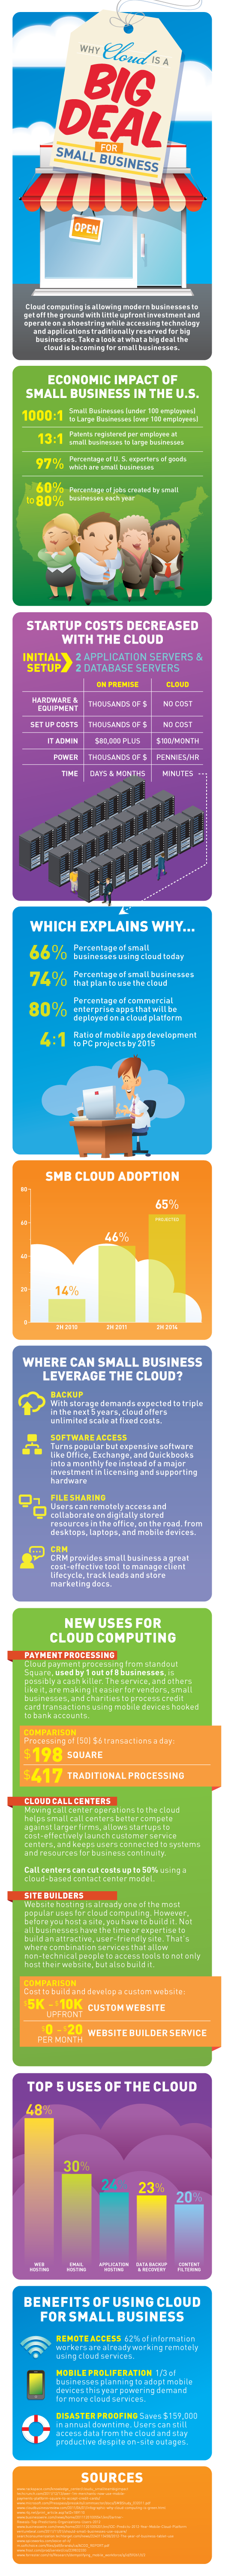 cloud small biz infographic